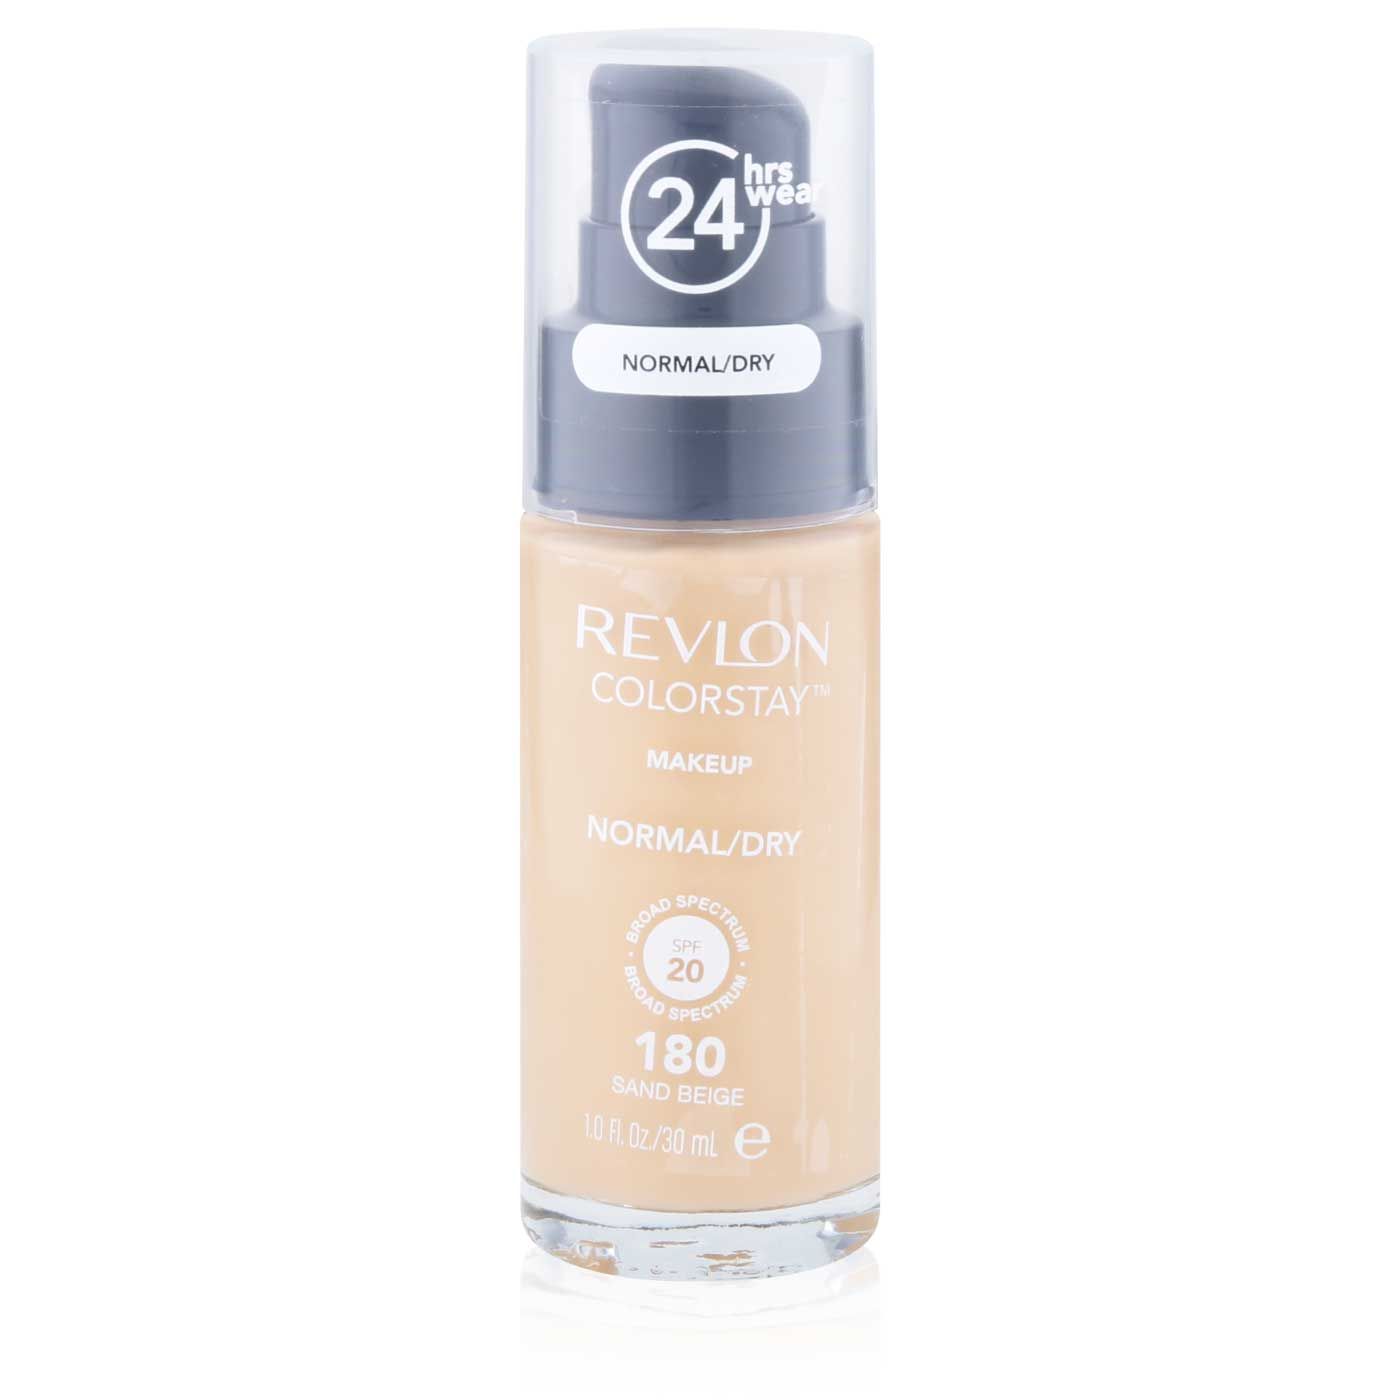 Revlon Colorstay Makeup Normal/Dry Sand Beige w/ Pump - 1